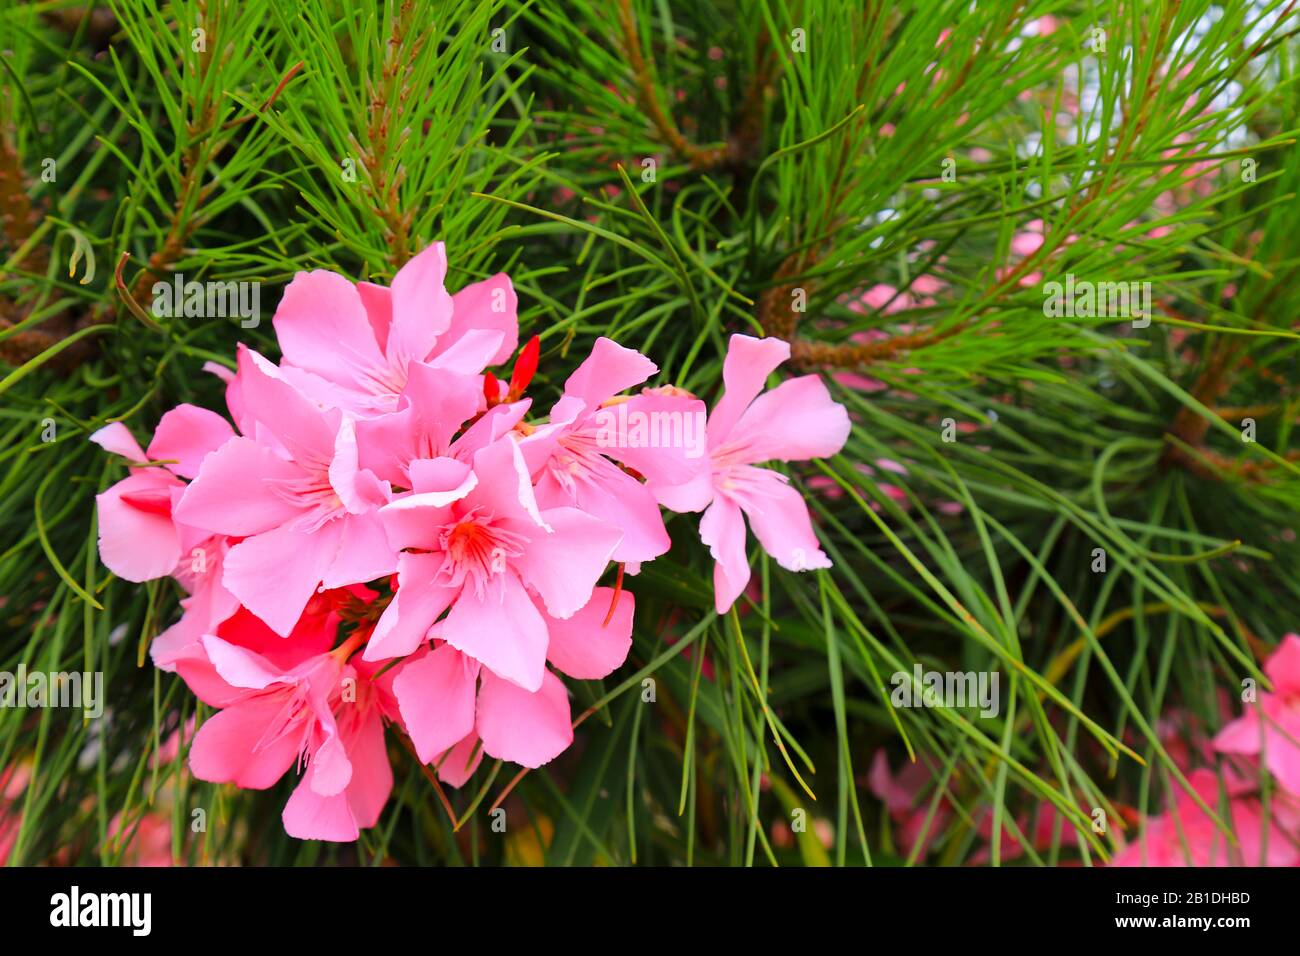 Delicate Flowers Of A Pink Oleander Nerium Oleander Bloomed In The